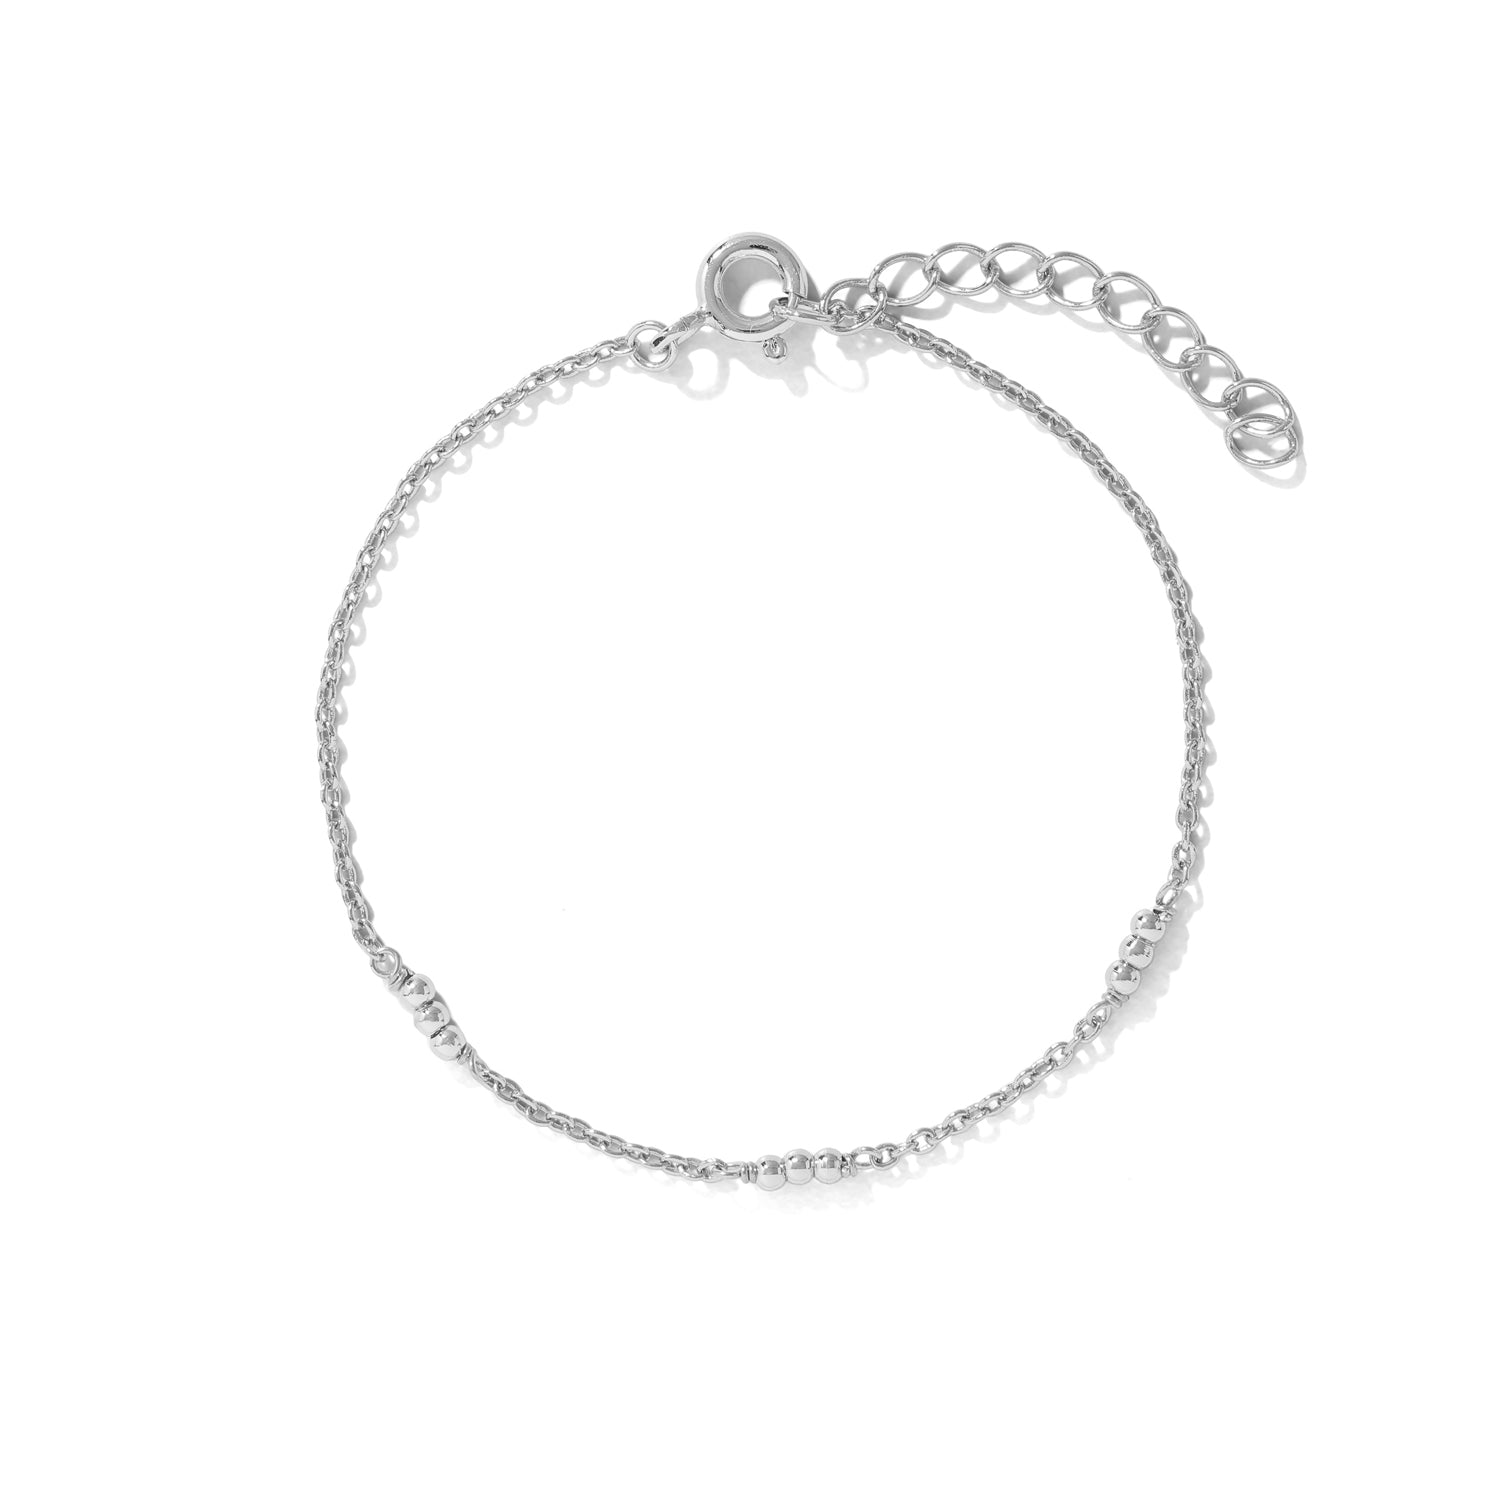 Minimalist and dainty chain bracelet. 925 silver chain bracelet.